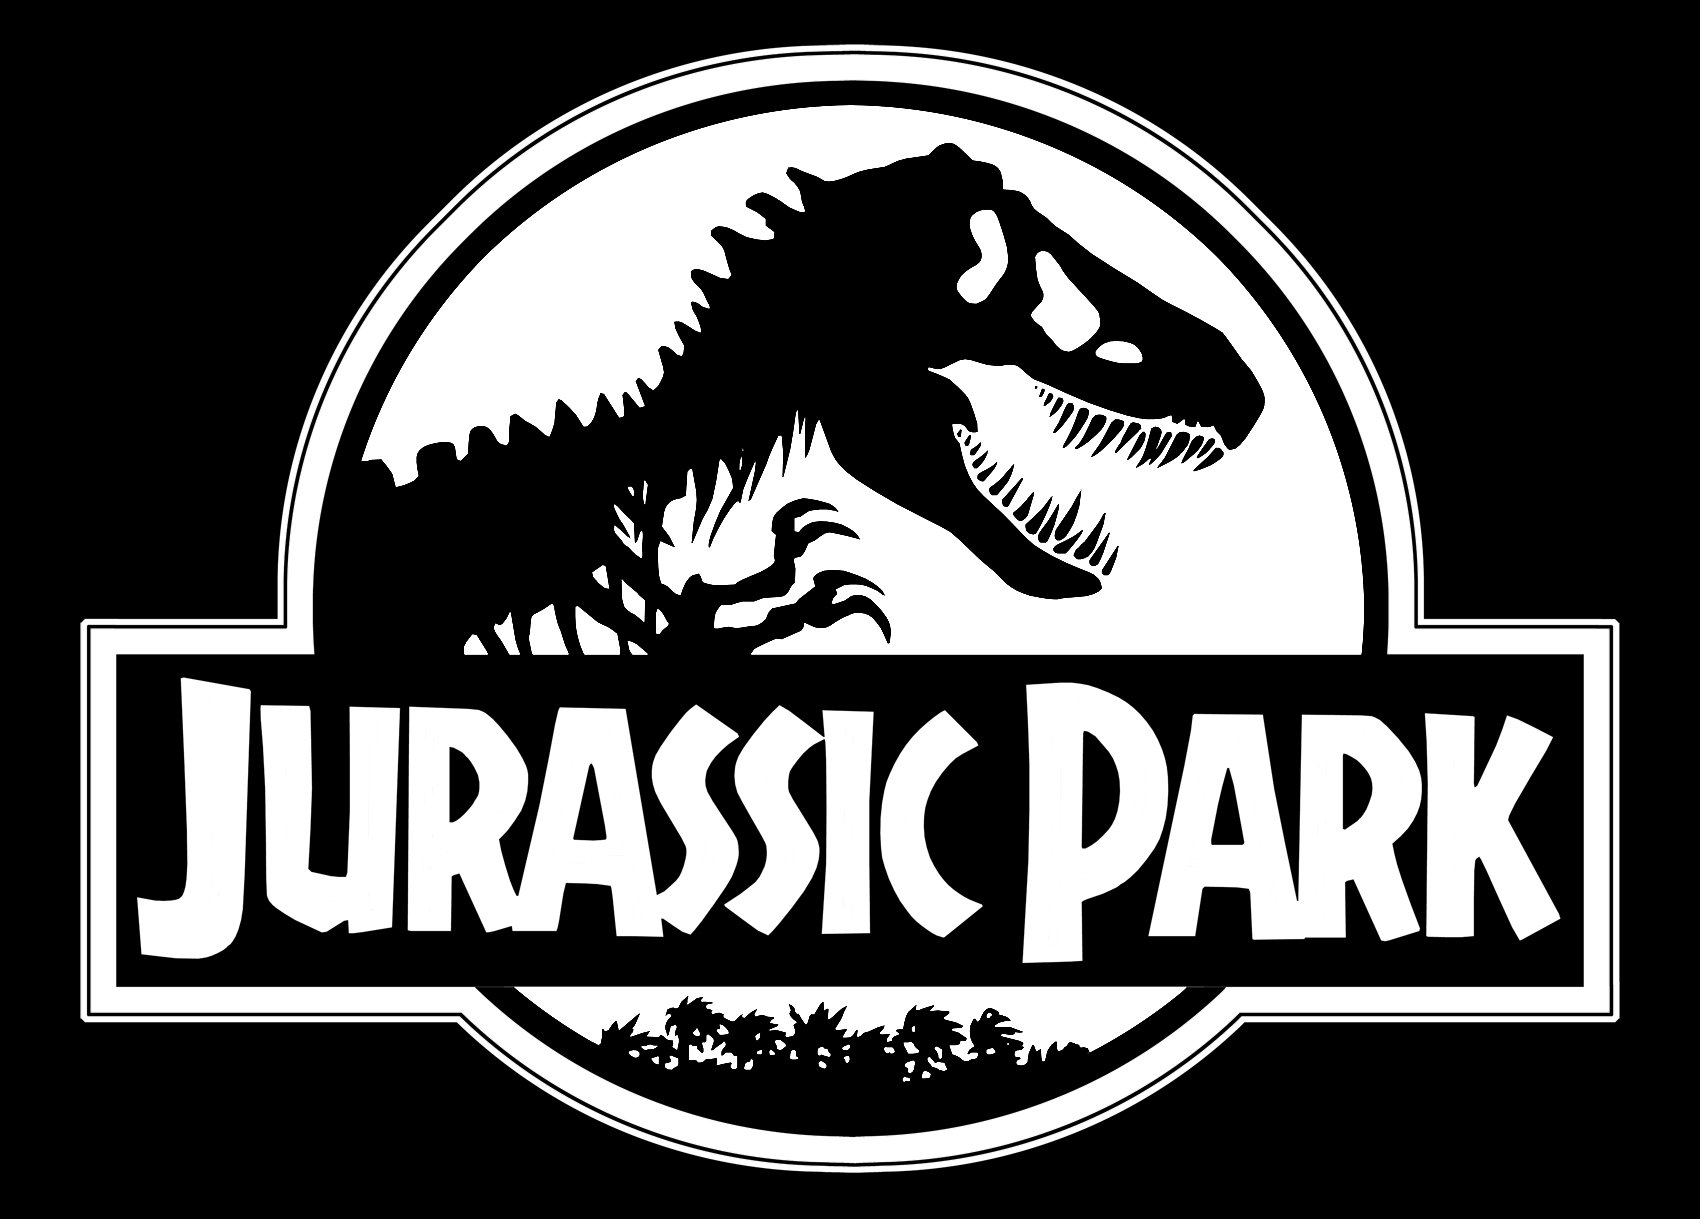 Jurassic Park Logo, Jurassic Park Symbol, Meaning, History and Evolution